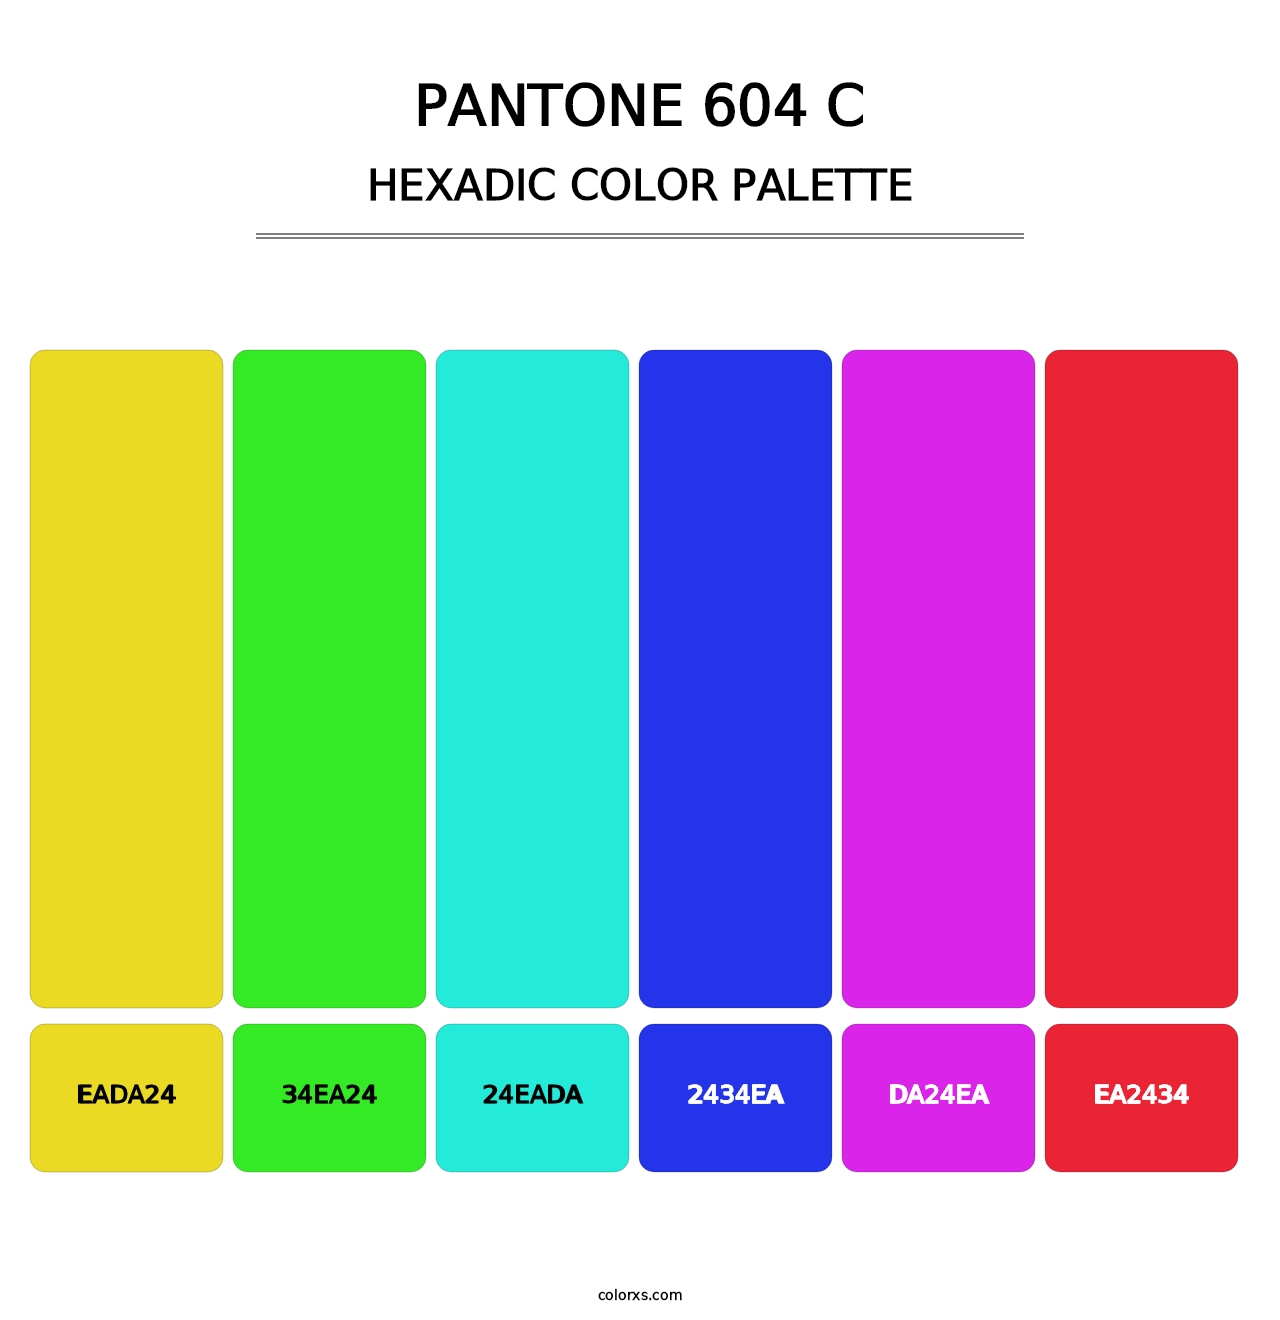 PANTONE 604 C - Hexadic Color Palette